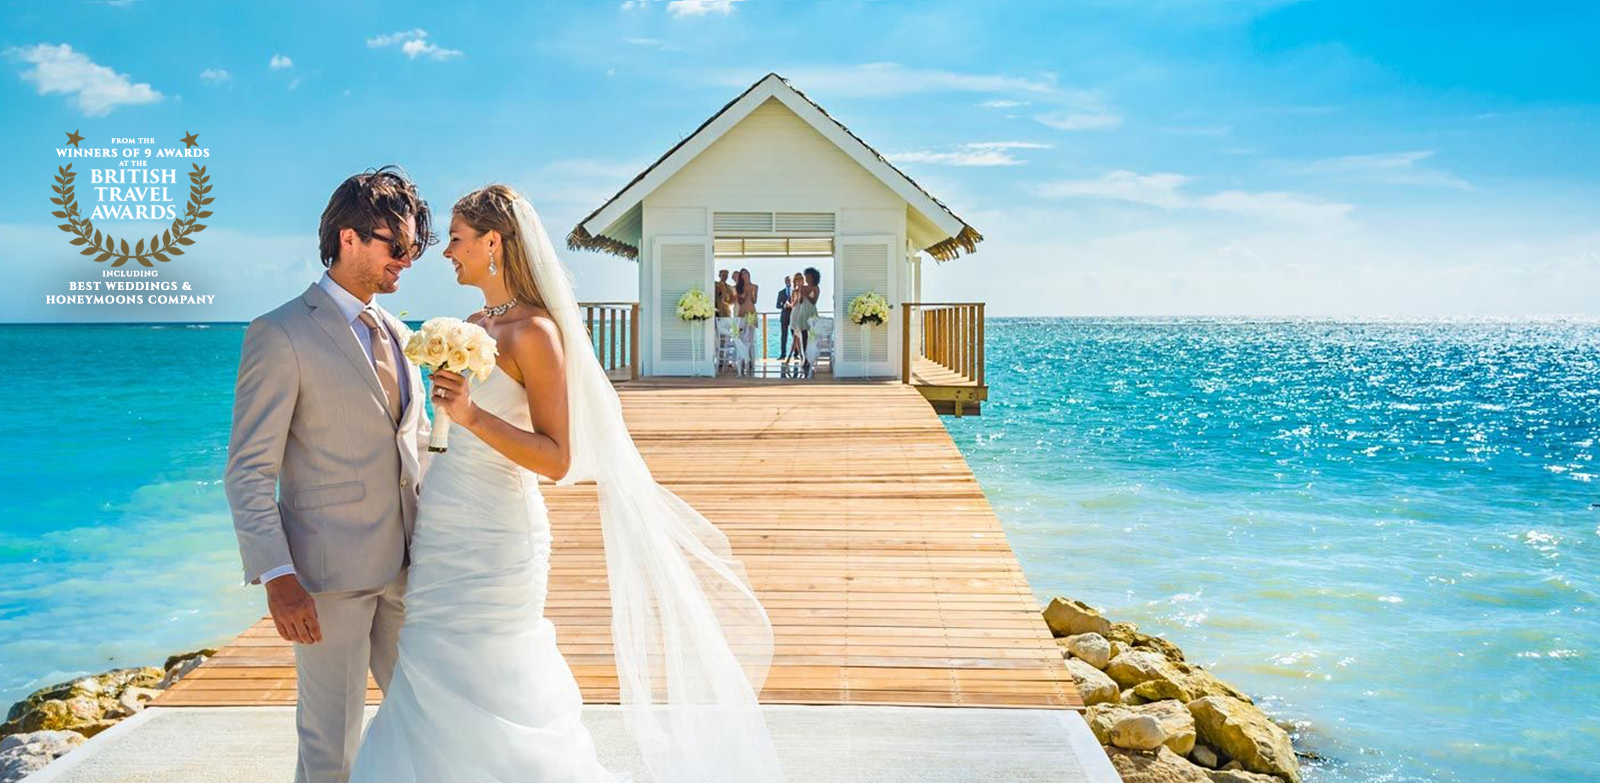 https://www.beachweddings.co.uk/wp-content/uploads/2020/02/Beach-Weddings-Weddings-Abroad-header-1.jpg